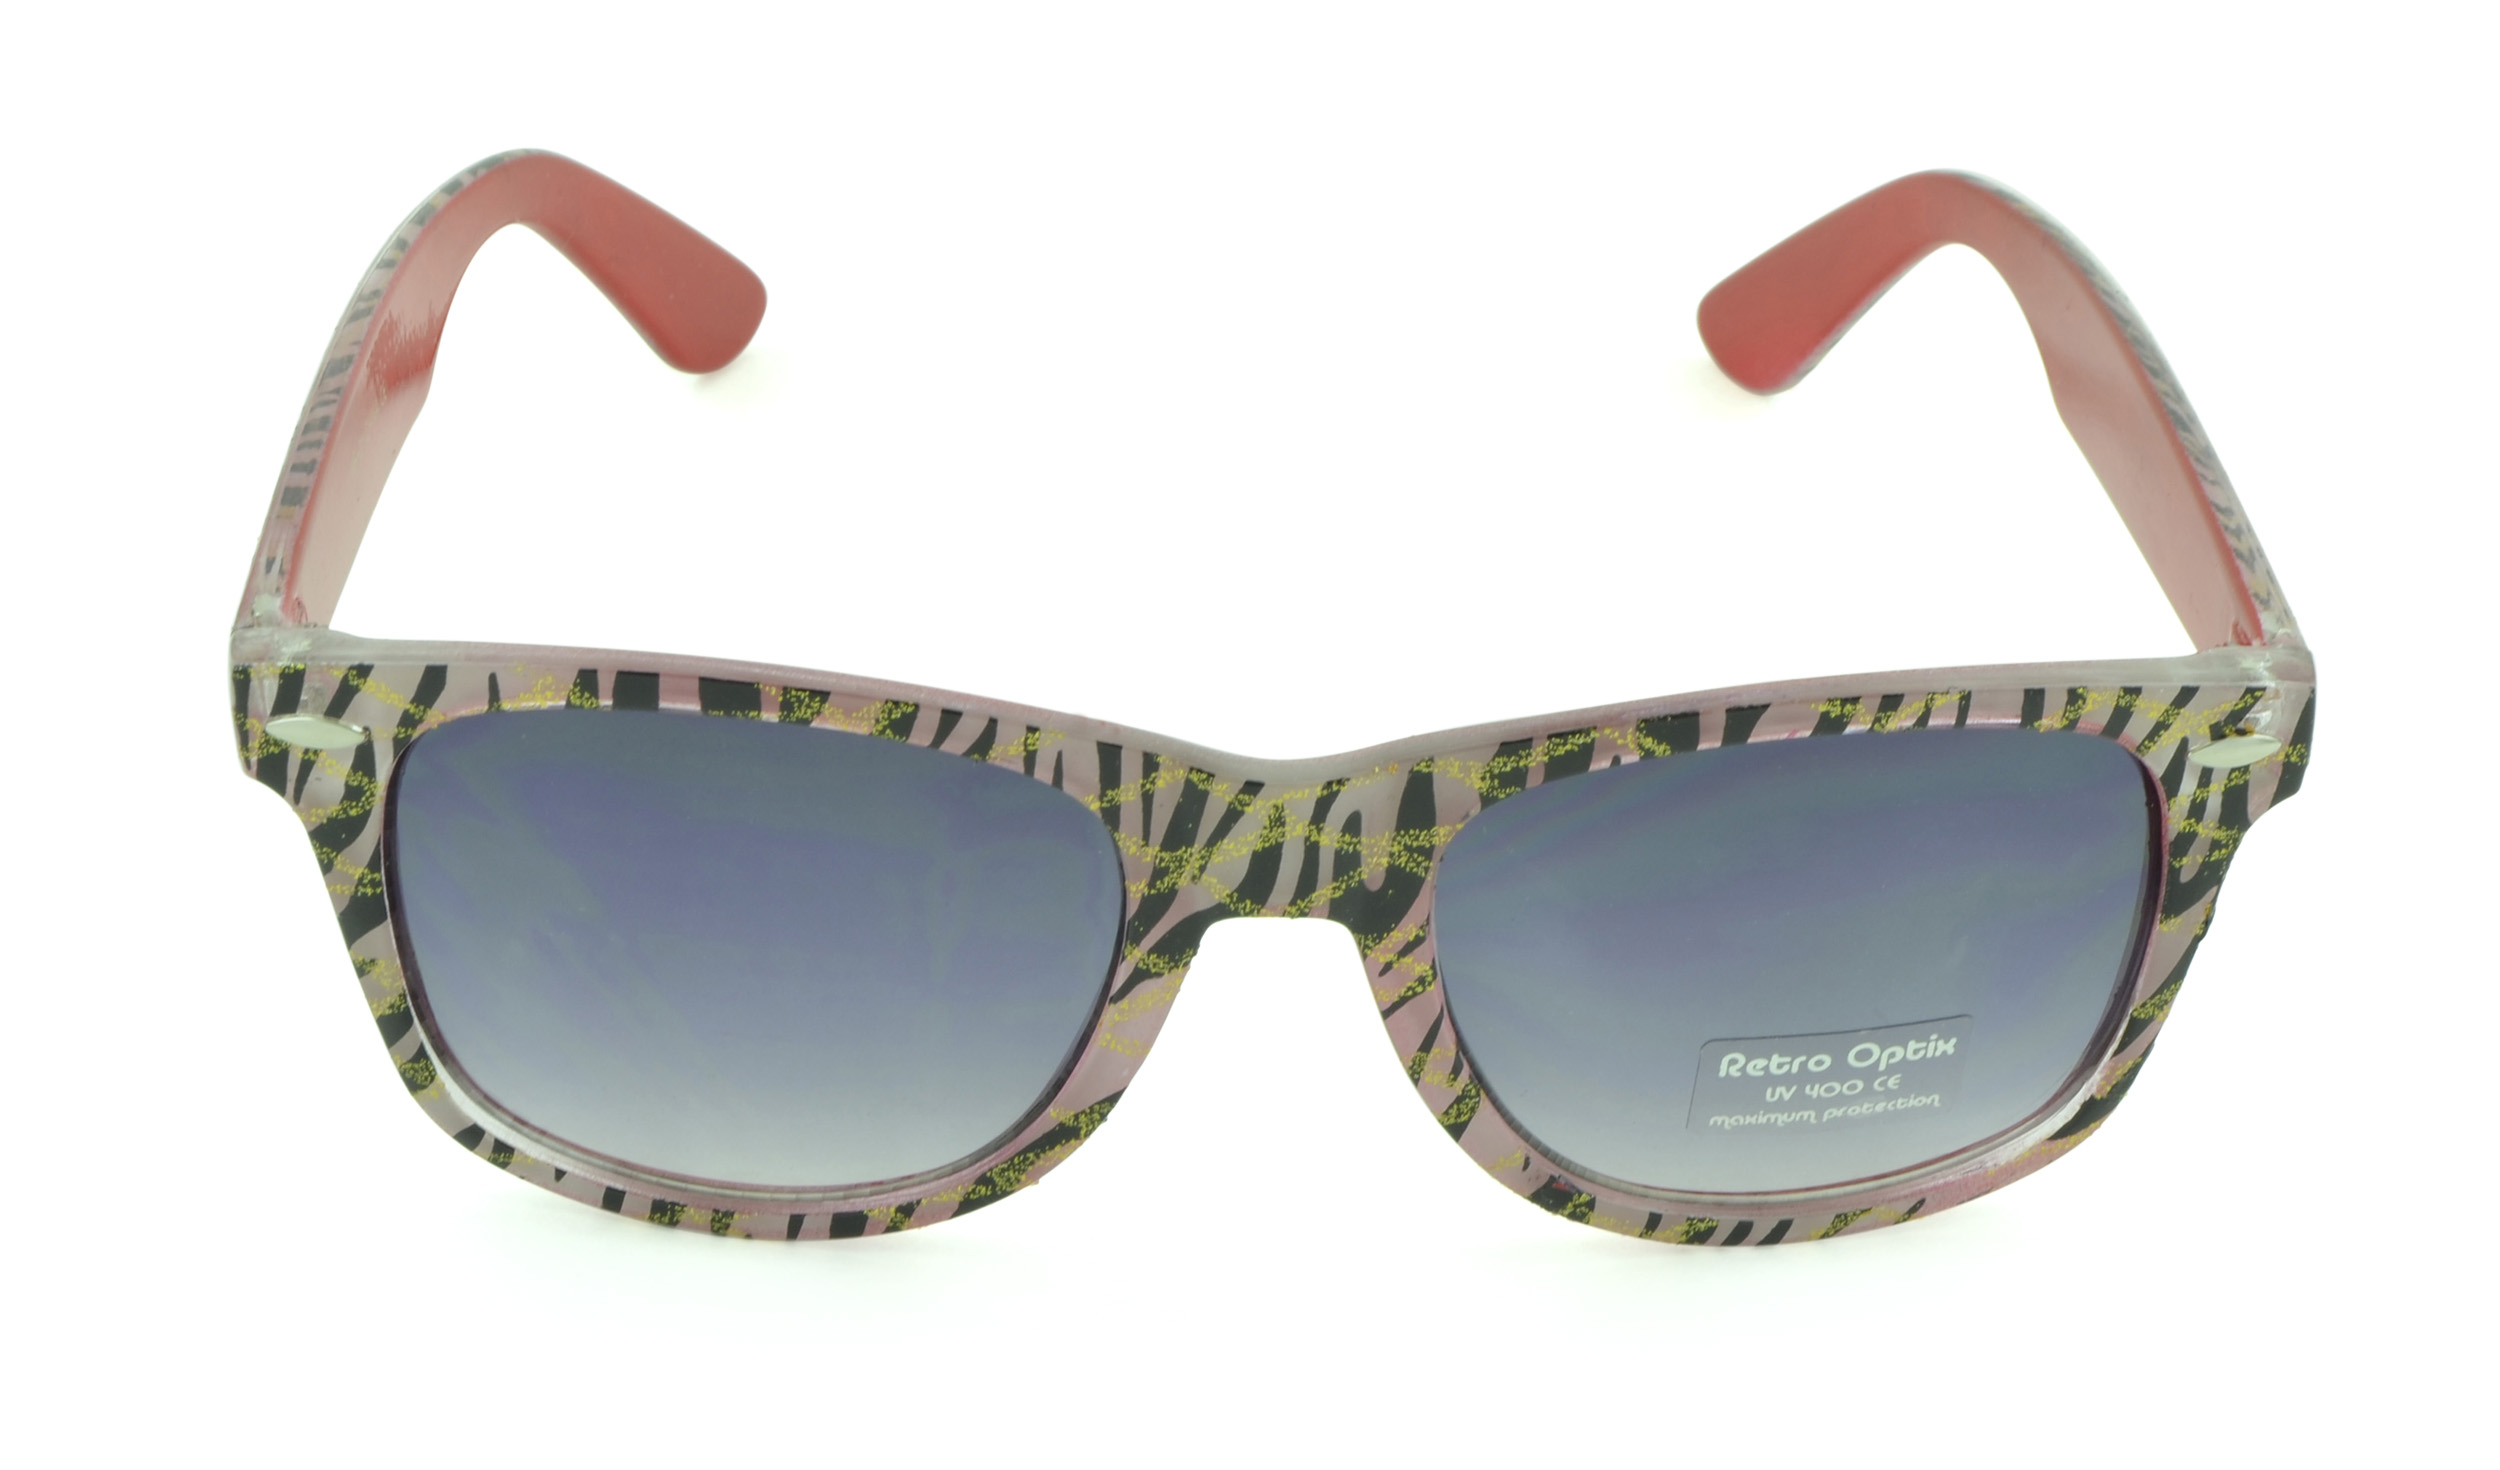 Belle Donne - Wayfarer Style Sunglasses Trendy Cheap Sunglasses High Quality Animal Print - Red 